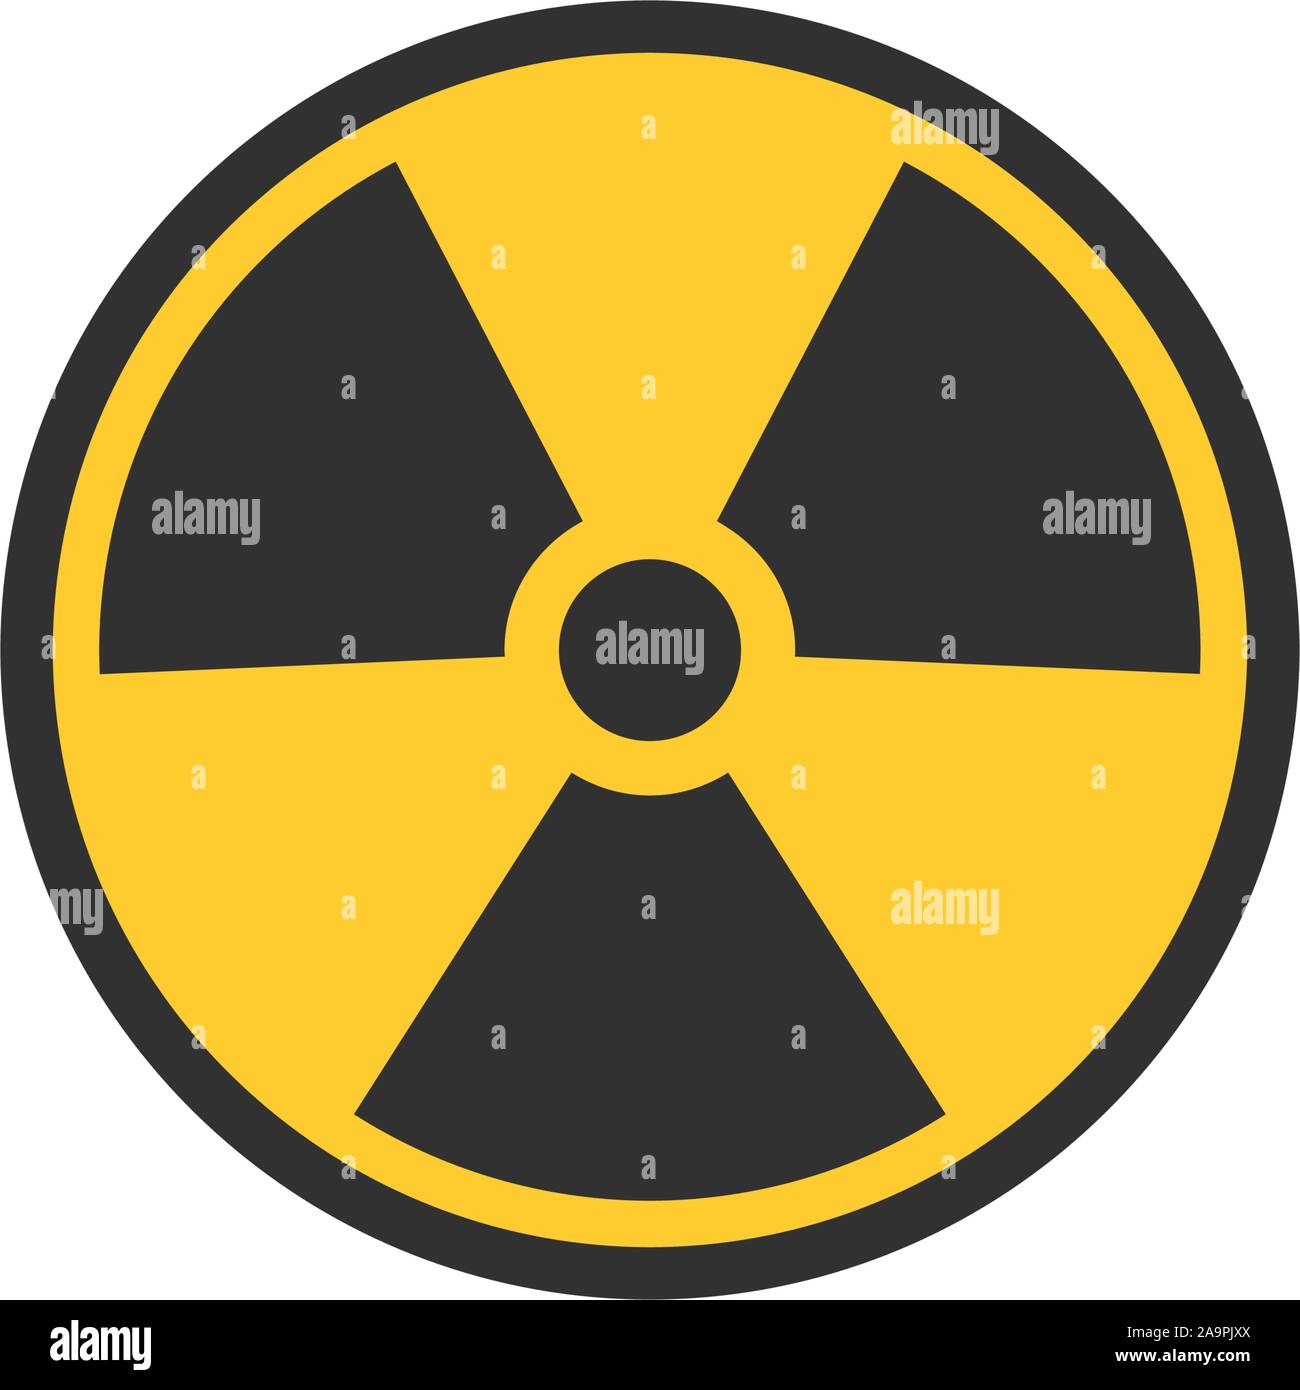 Radioactive contamination symbol. Nuclear sign. Radiation hazard. Radiation warning sign. Stock Vector illustration isolated on white background. Stock Vector